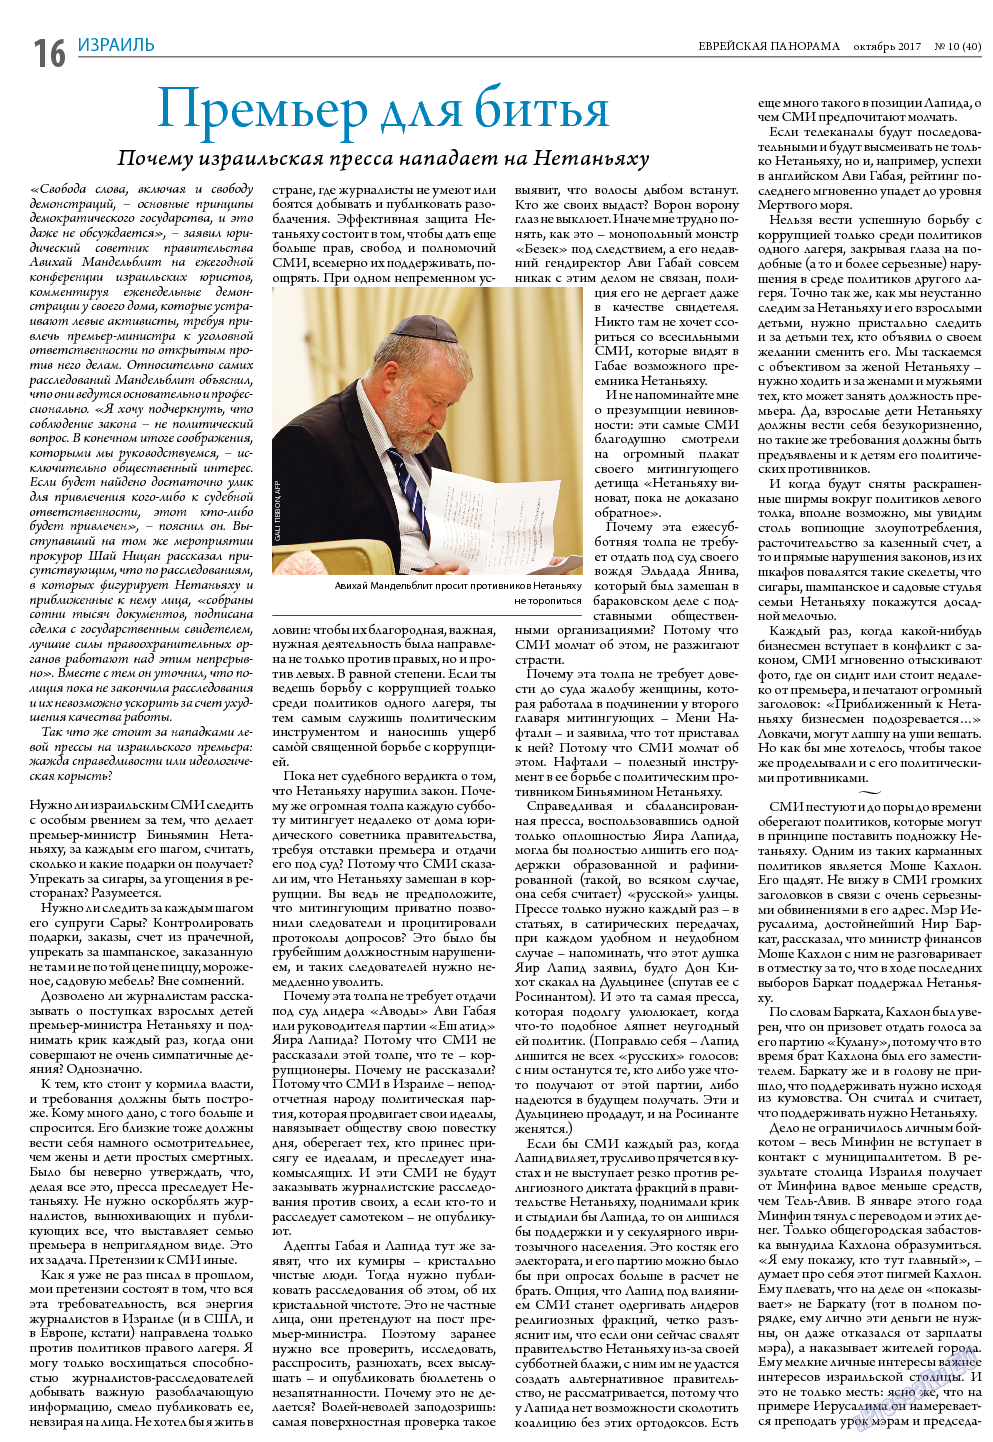 Еврейская панорама, газета. 2017 №10 стр.16